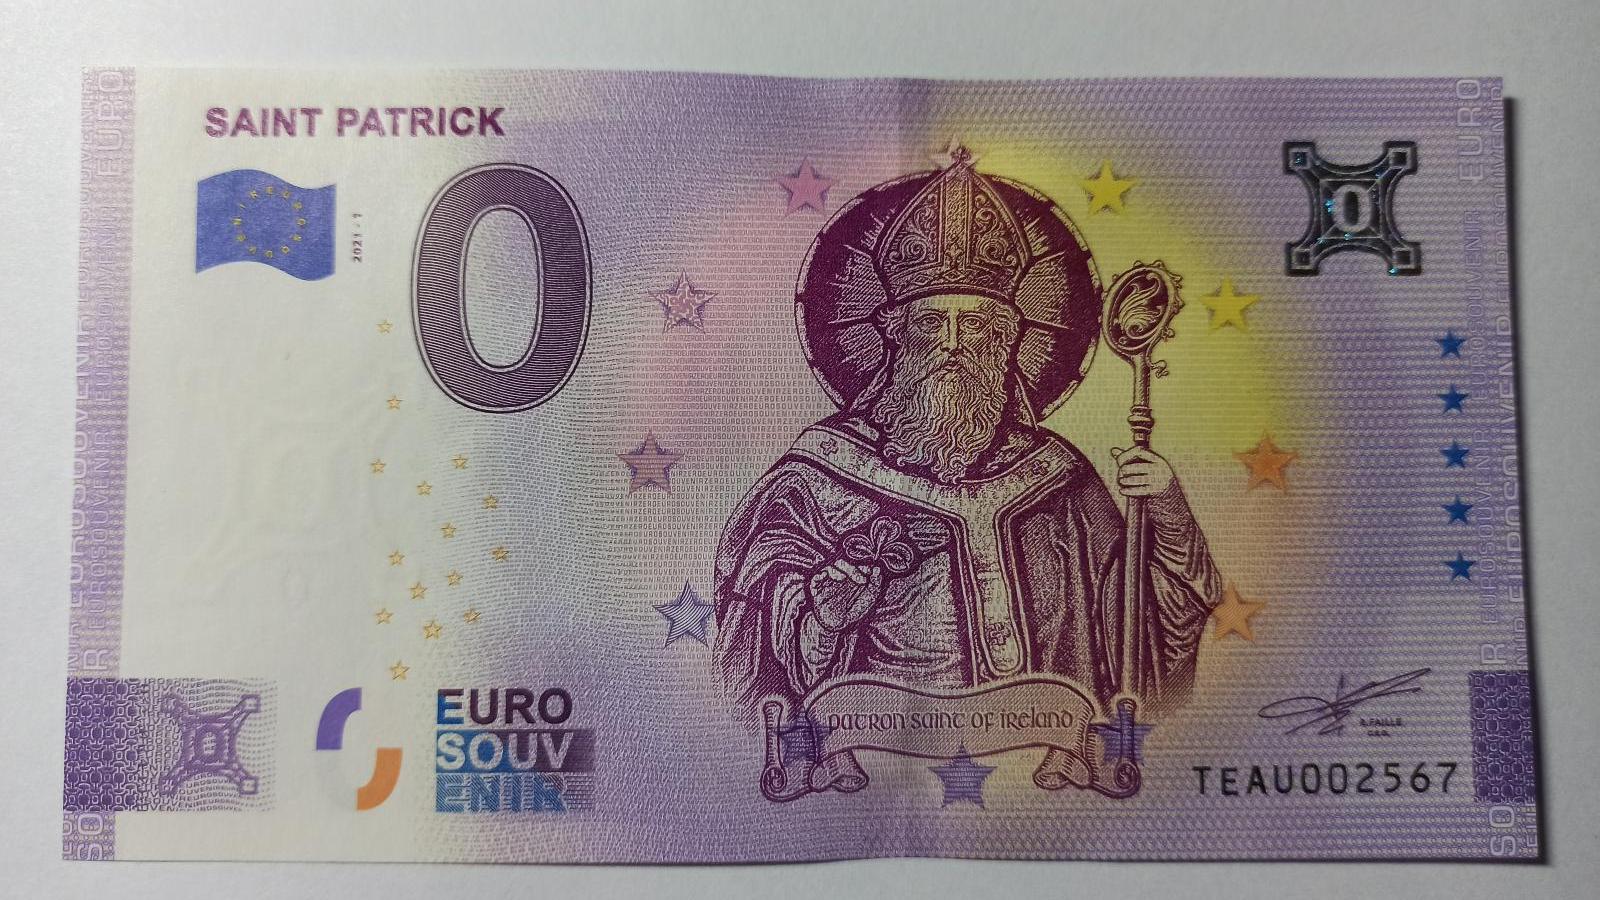 0 Euro bankovka suvenir SAINT PATRICK 2021-1 - Zberateľstvo